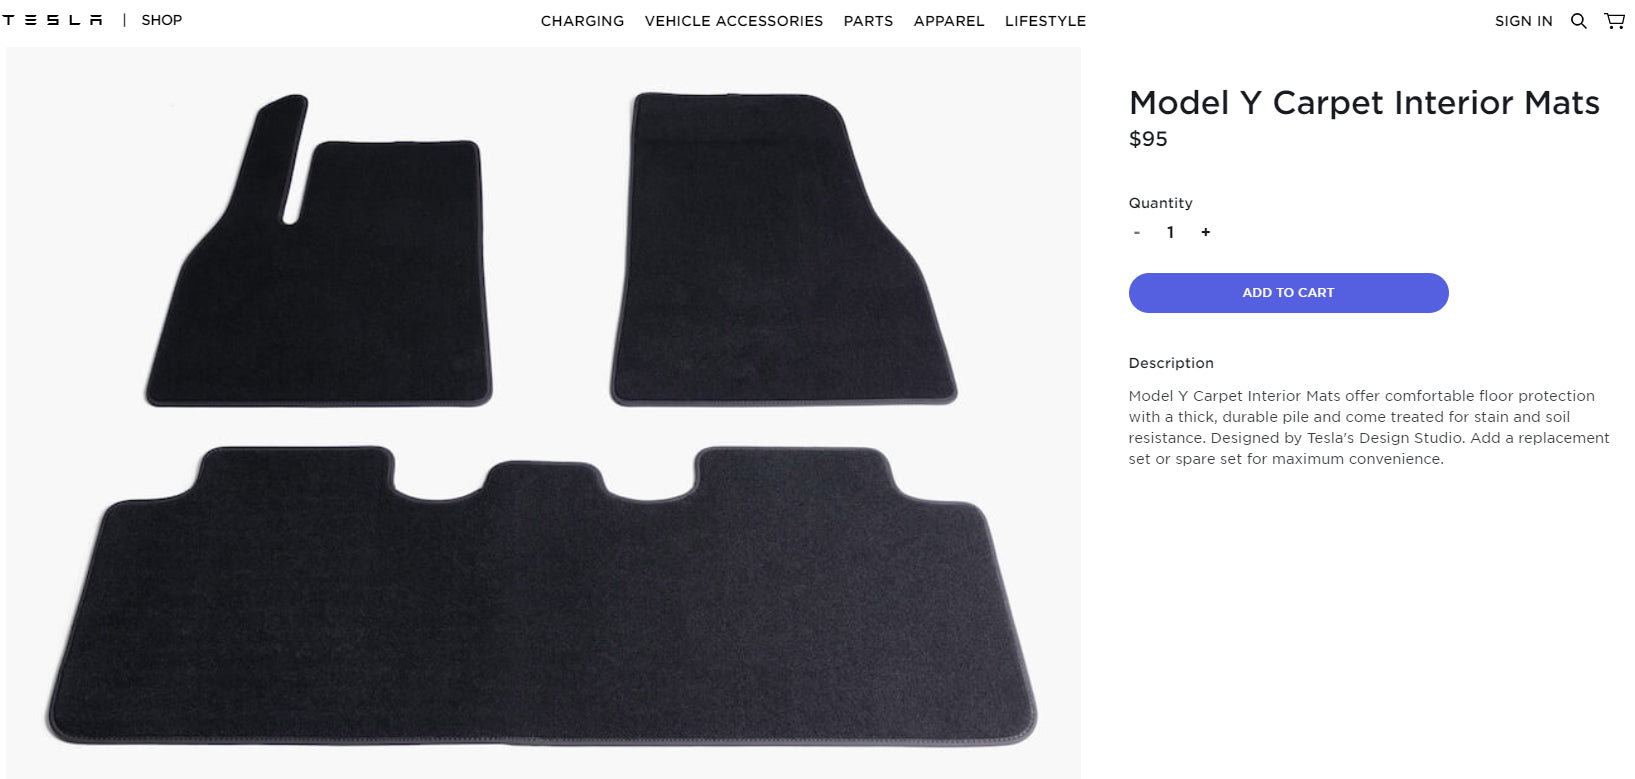 Tesla Adds Model Y Carpet Floor Mats and Frunk Trunk Mat To The Online Shop